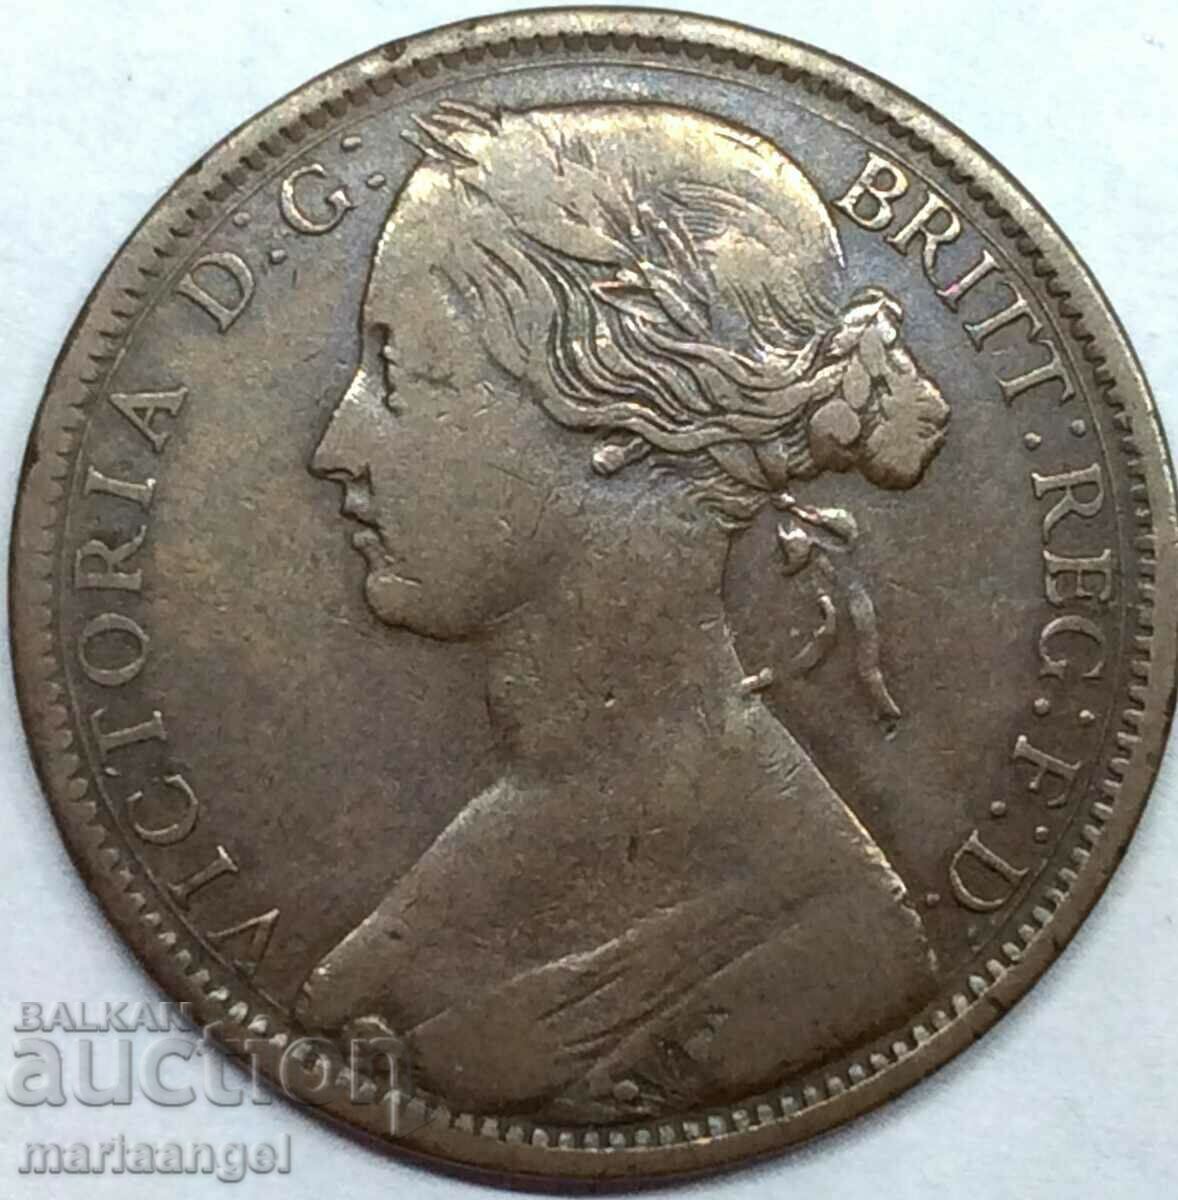 Great Britain 1 penny 1862 30mm - quite rare!